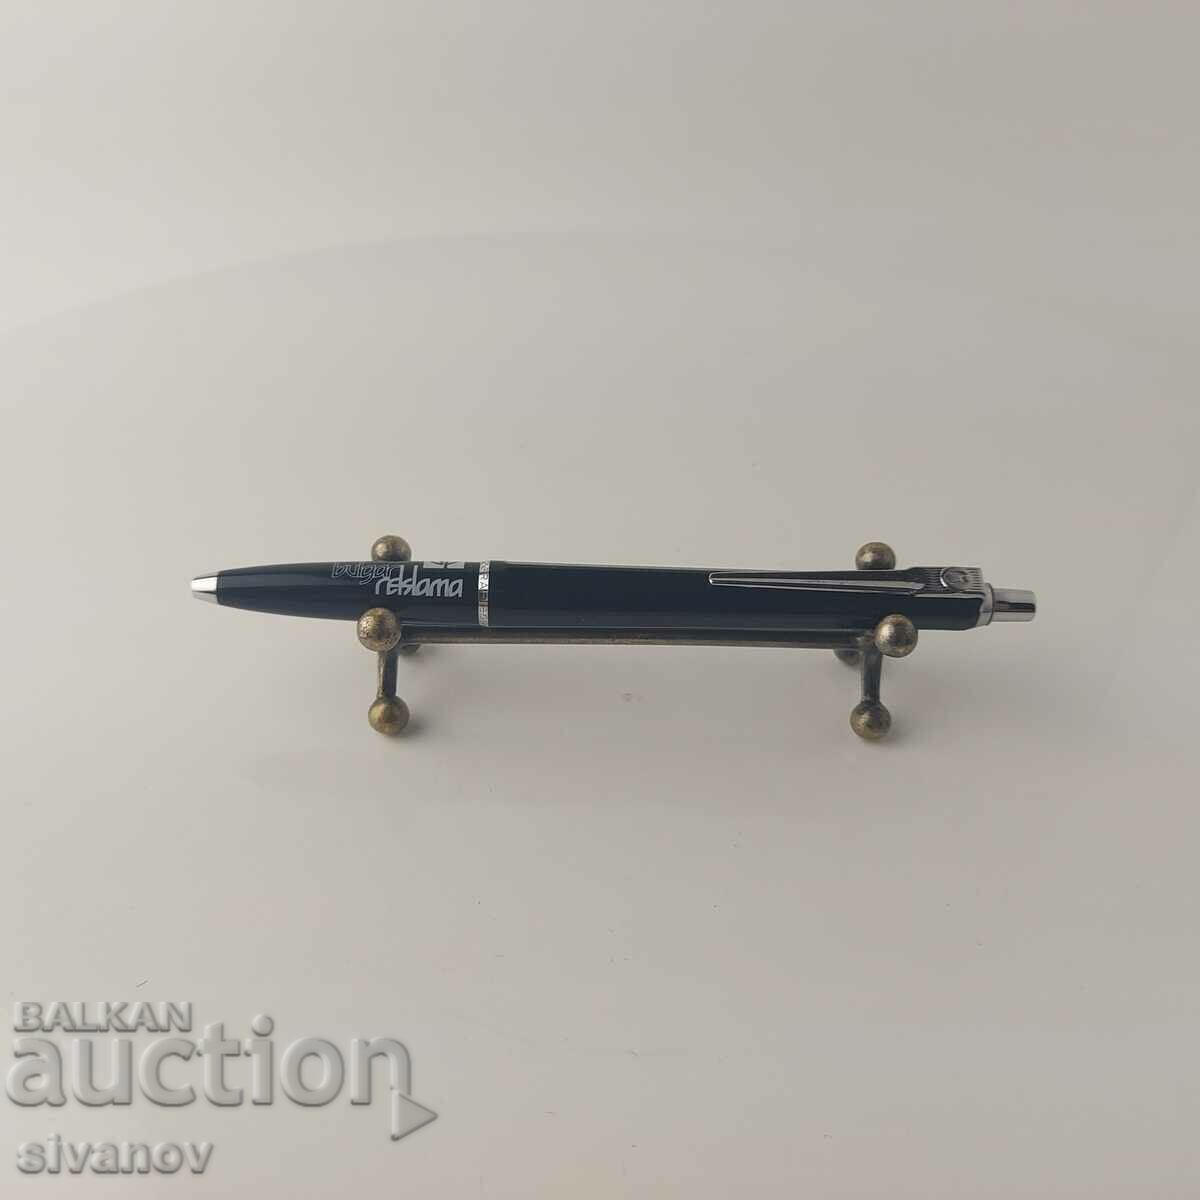 Old Ballograf Epoca Made in Sweden #5525 ballpoint pen